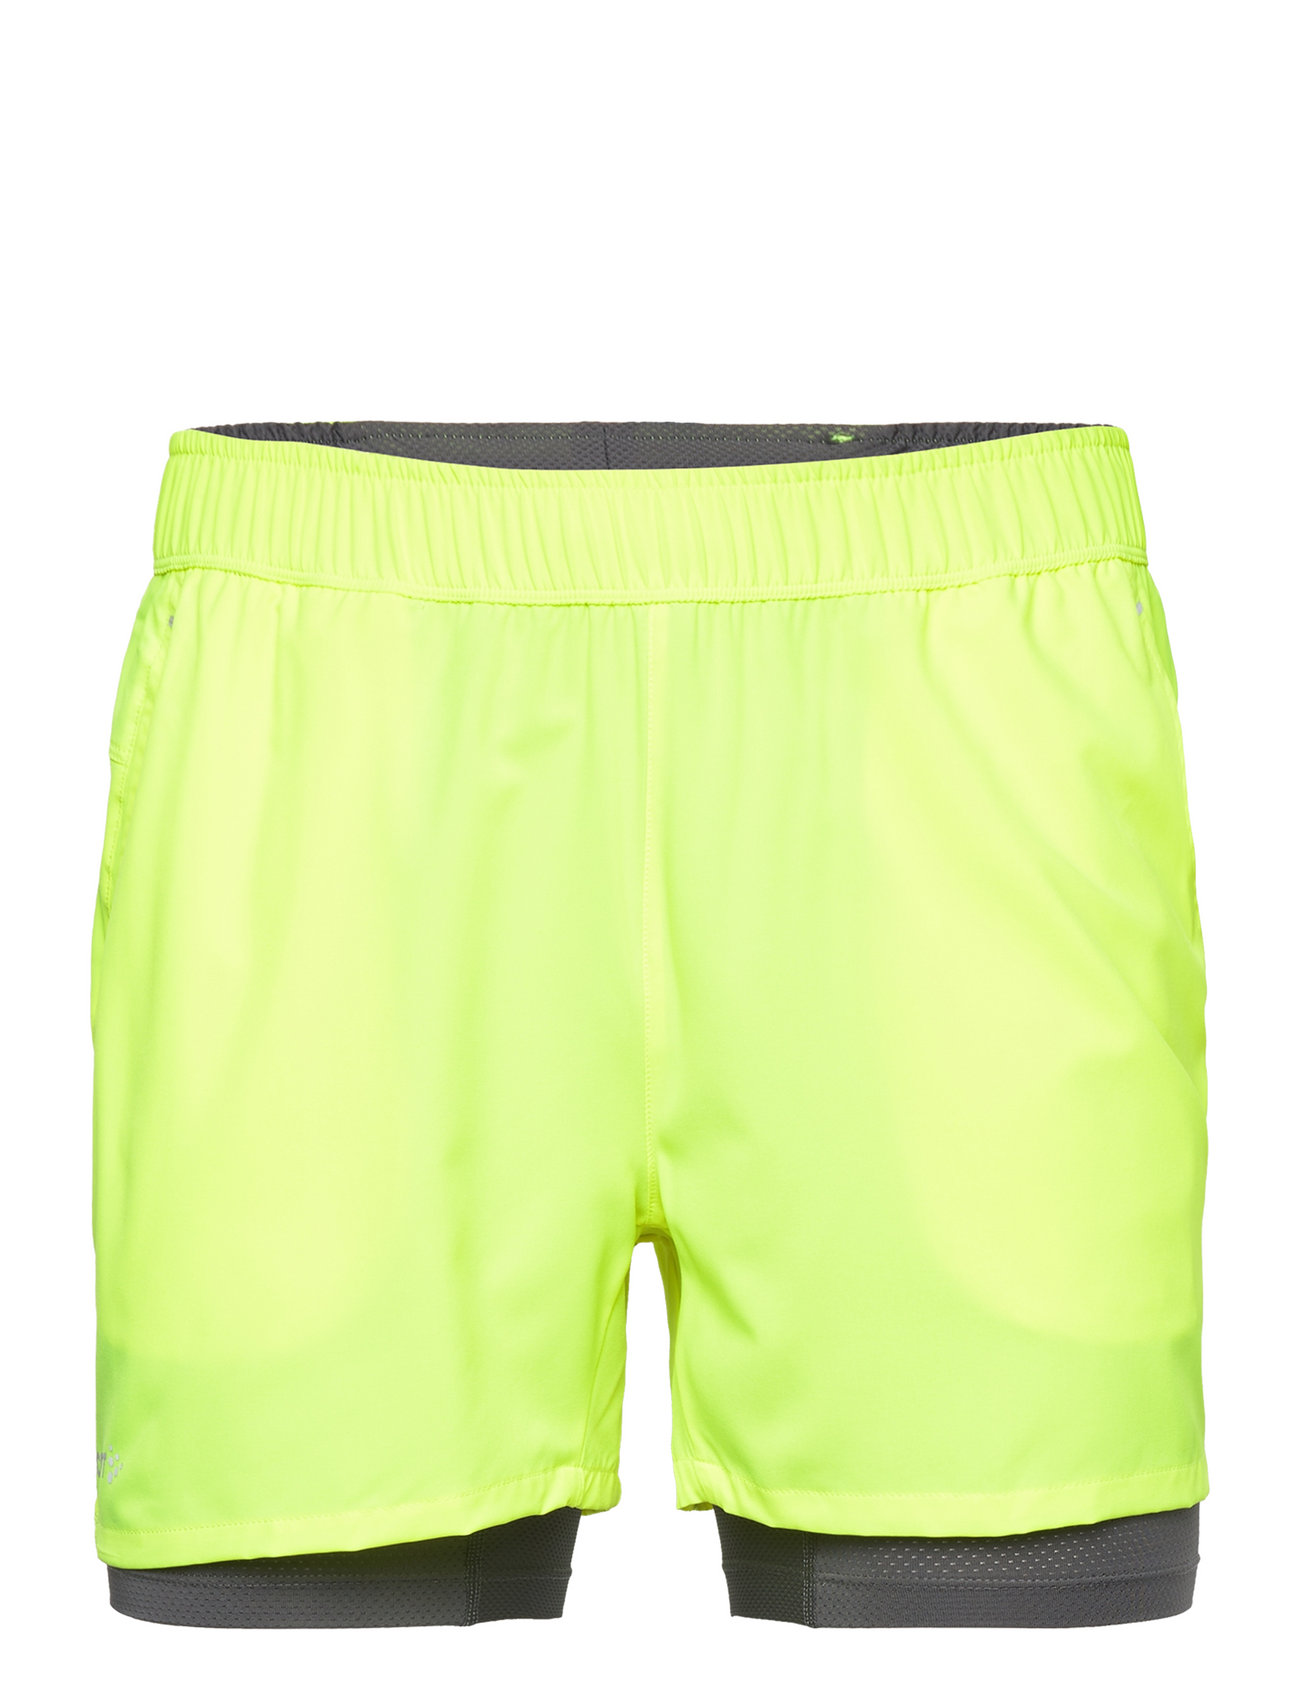 Craft Adv Essence 2-in-1 Stretch Shorts M - Sports shorts 